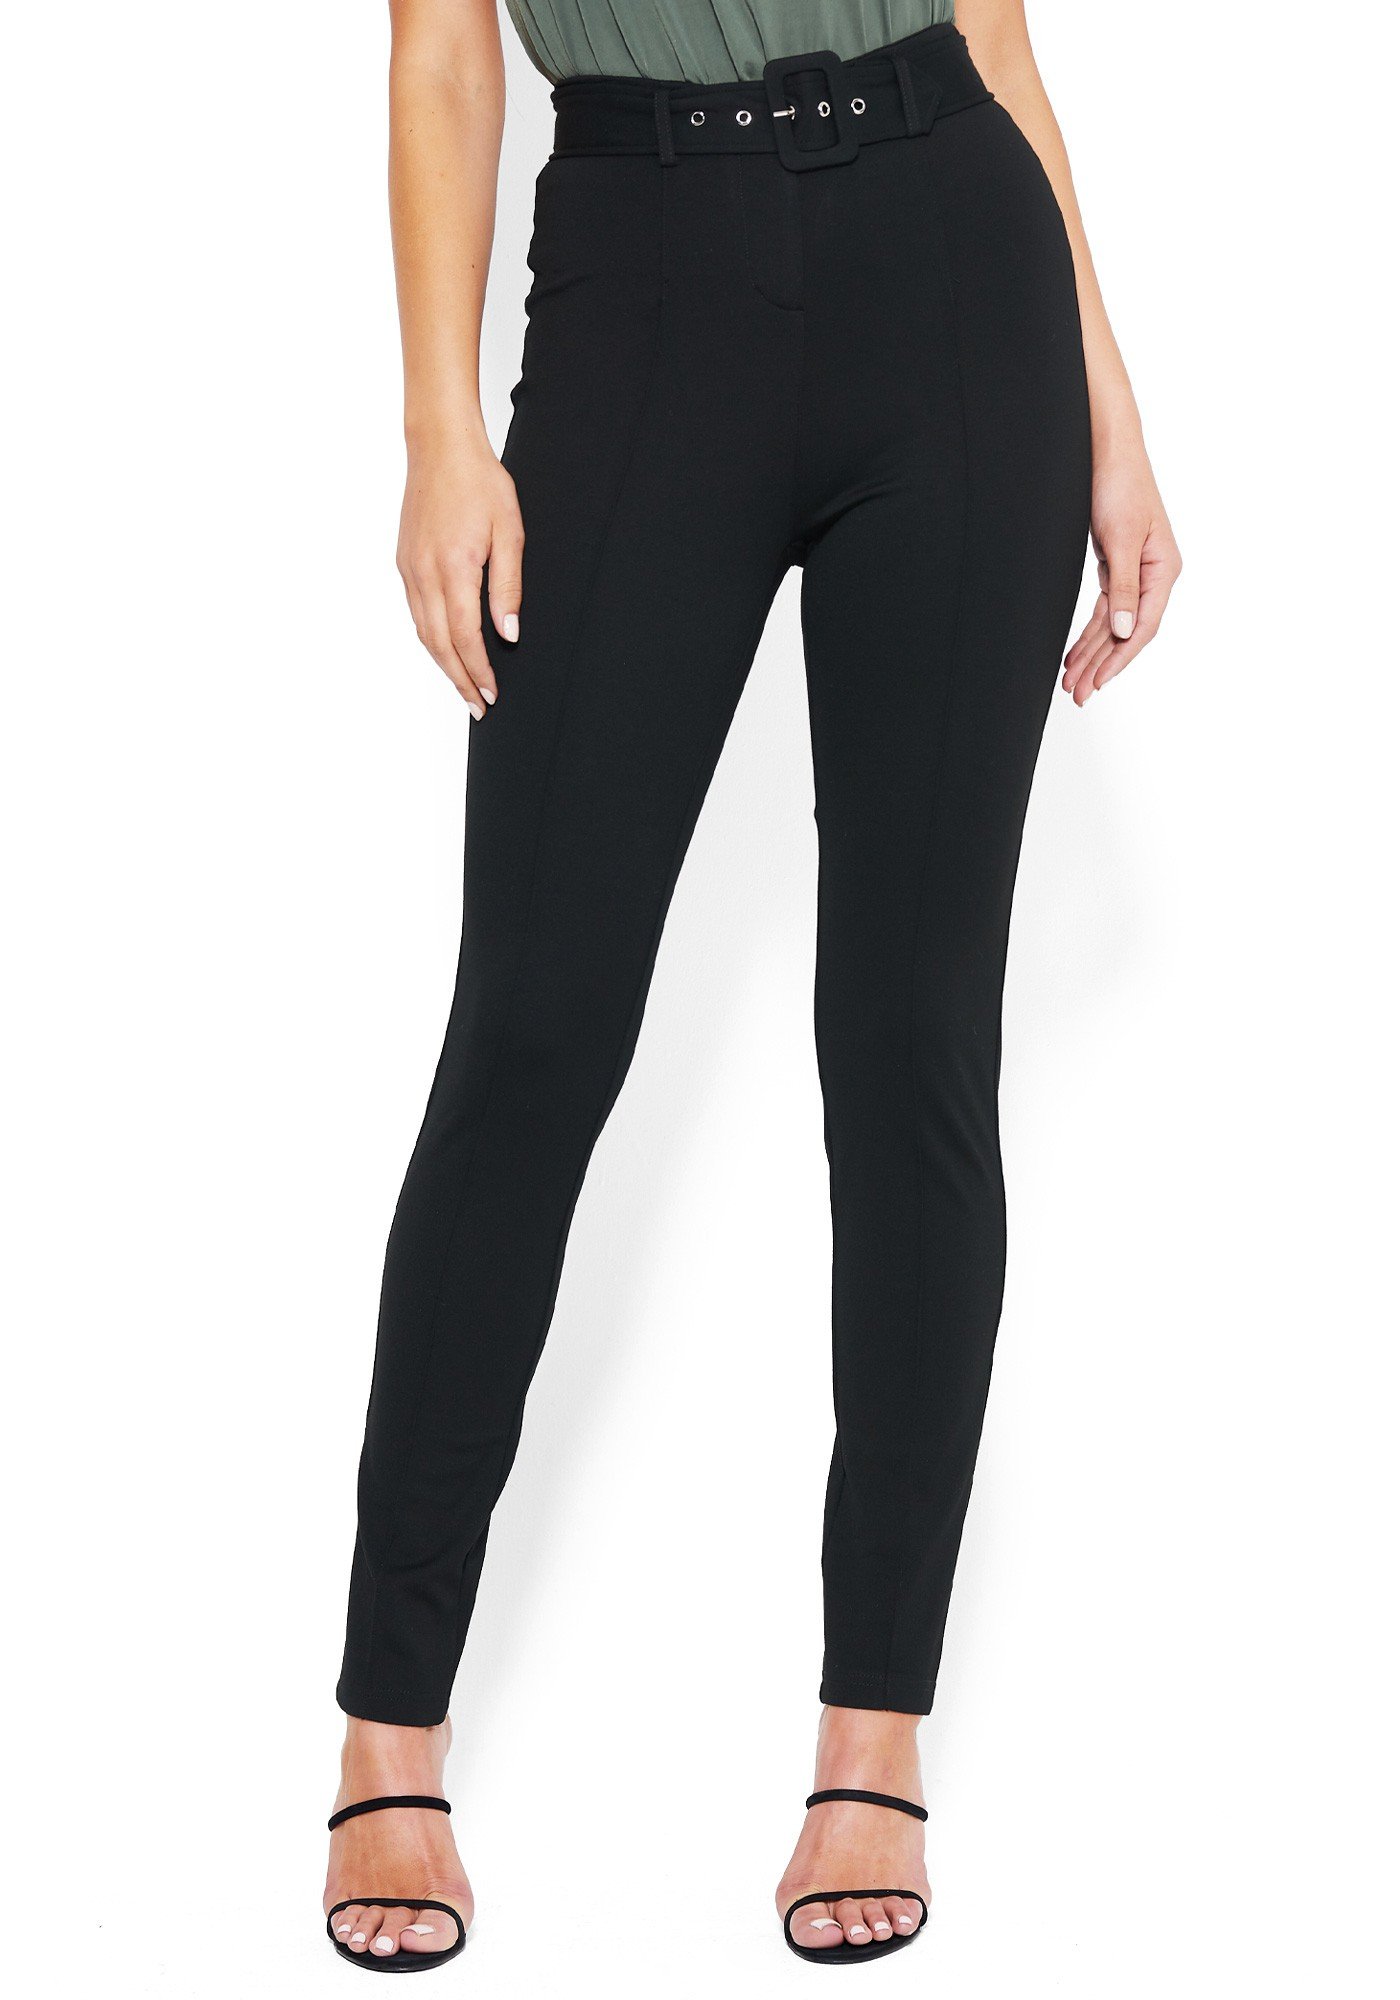 Bebe Women's Belted Straight Leg Trousers, Size 8 in Black Spandex/Nylon